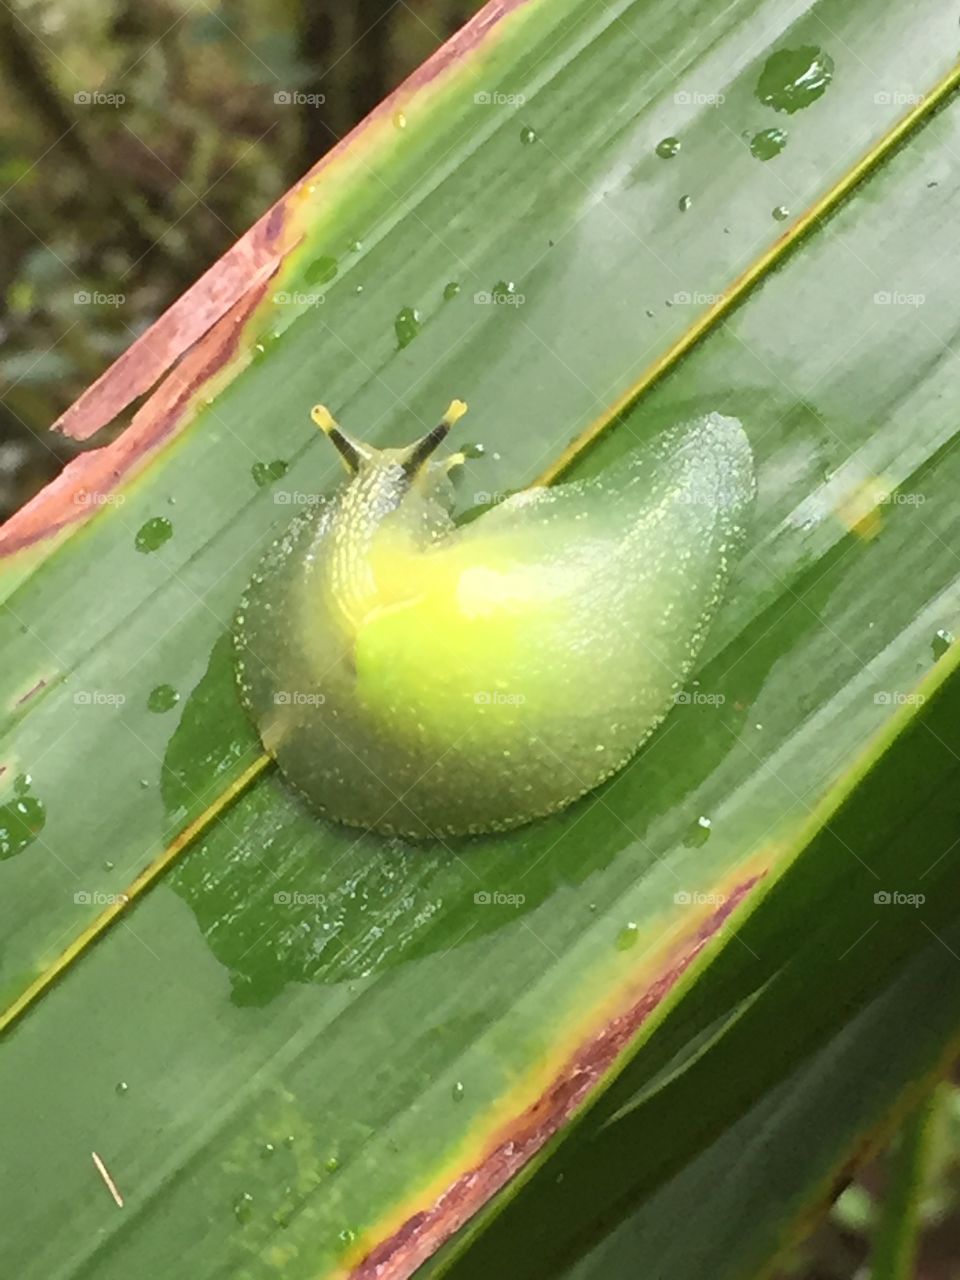 Snail in Puerto Rico 